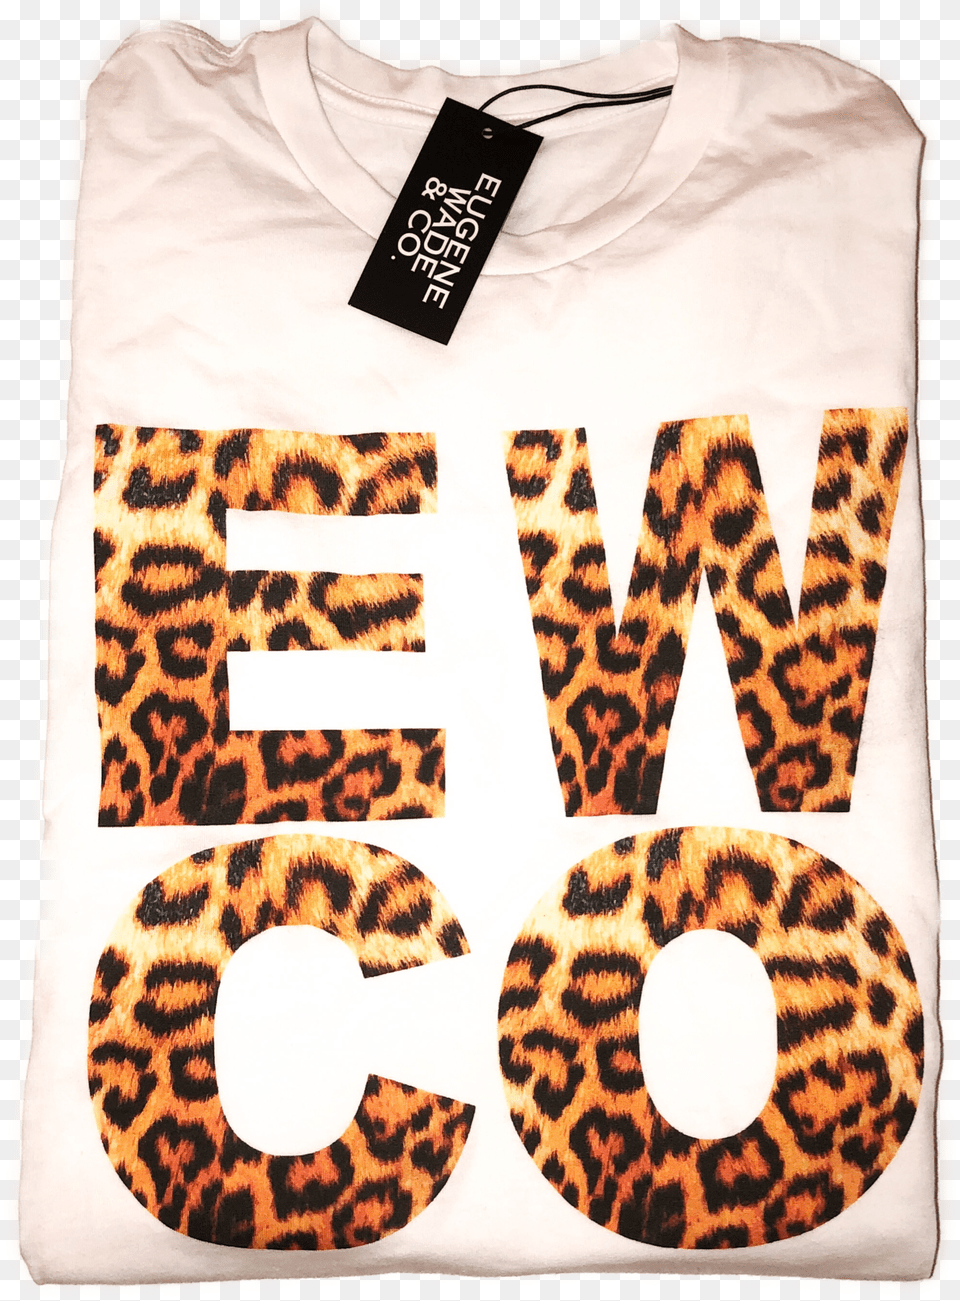 Of Cheetah Print Ewco Bag, Clothing, T-shirt, Shirt, Home Decor Free Transparent Png